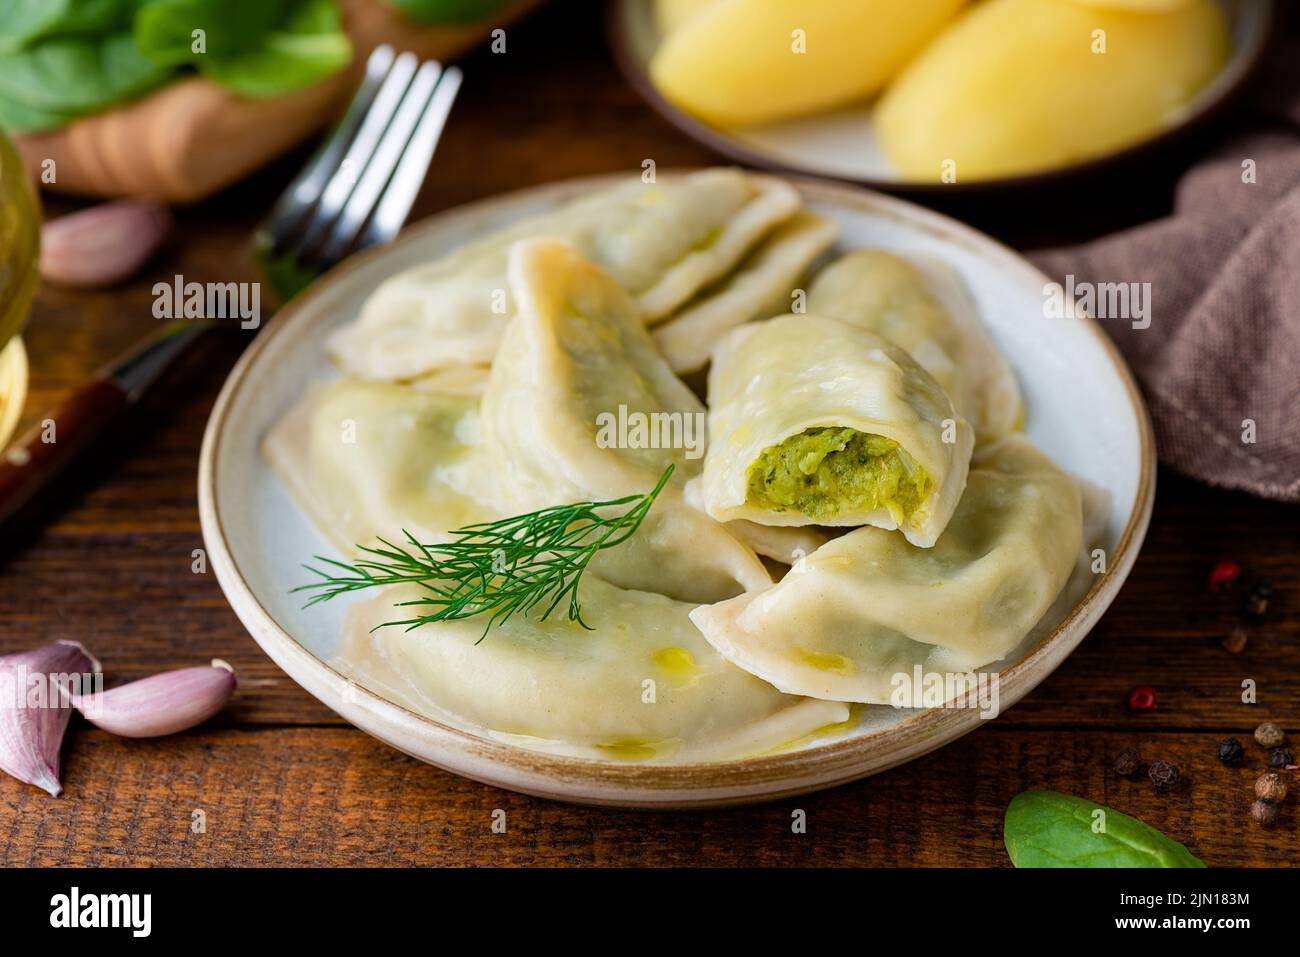 Ukrainian or polish dumplings, pierogi stuffed with potato and spinach mash served with olive oil, closeup view Stock Photo